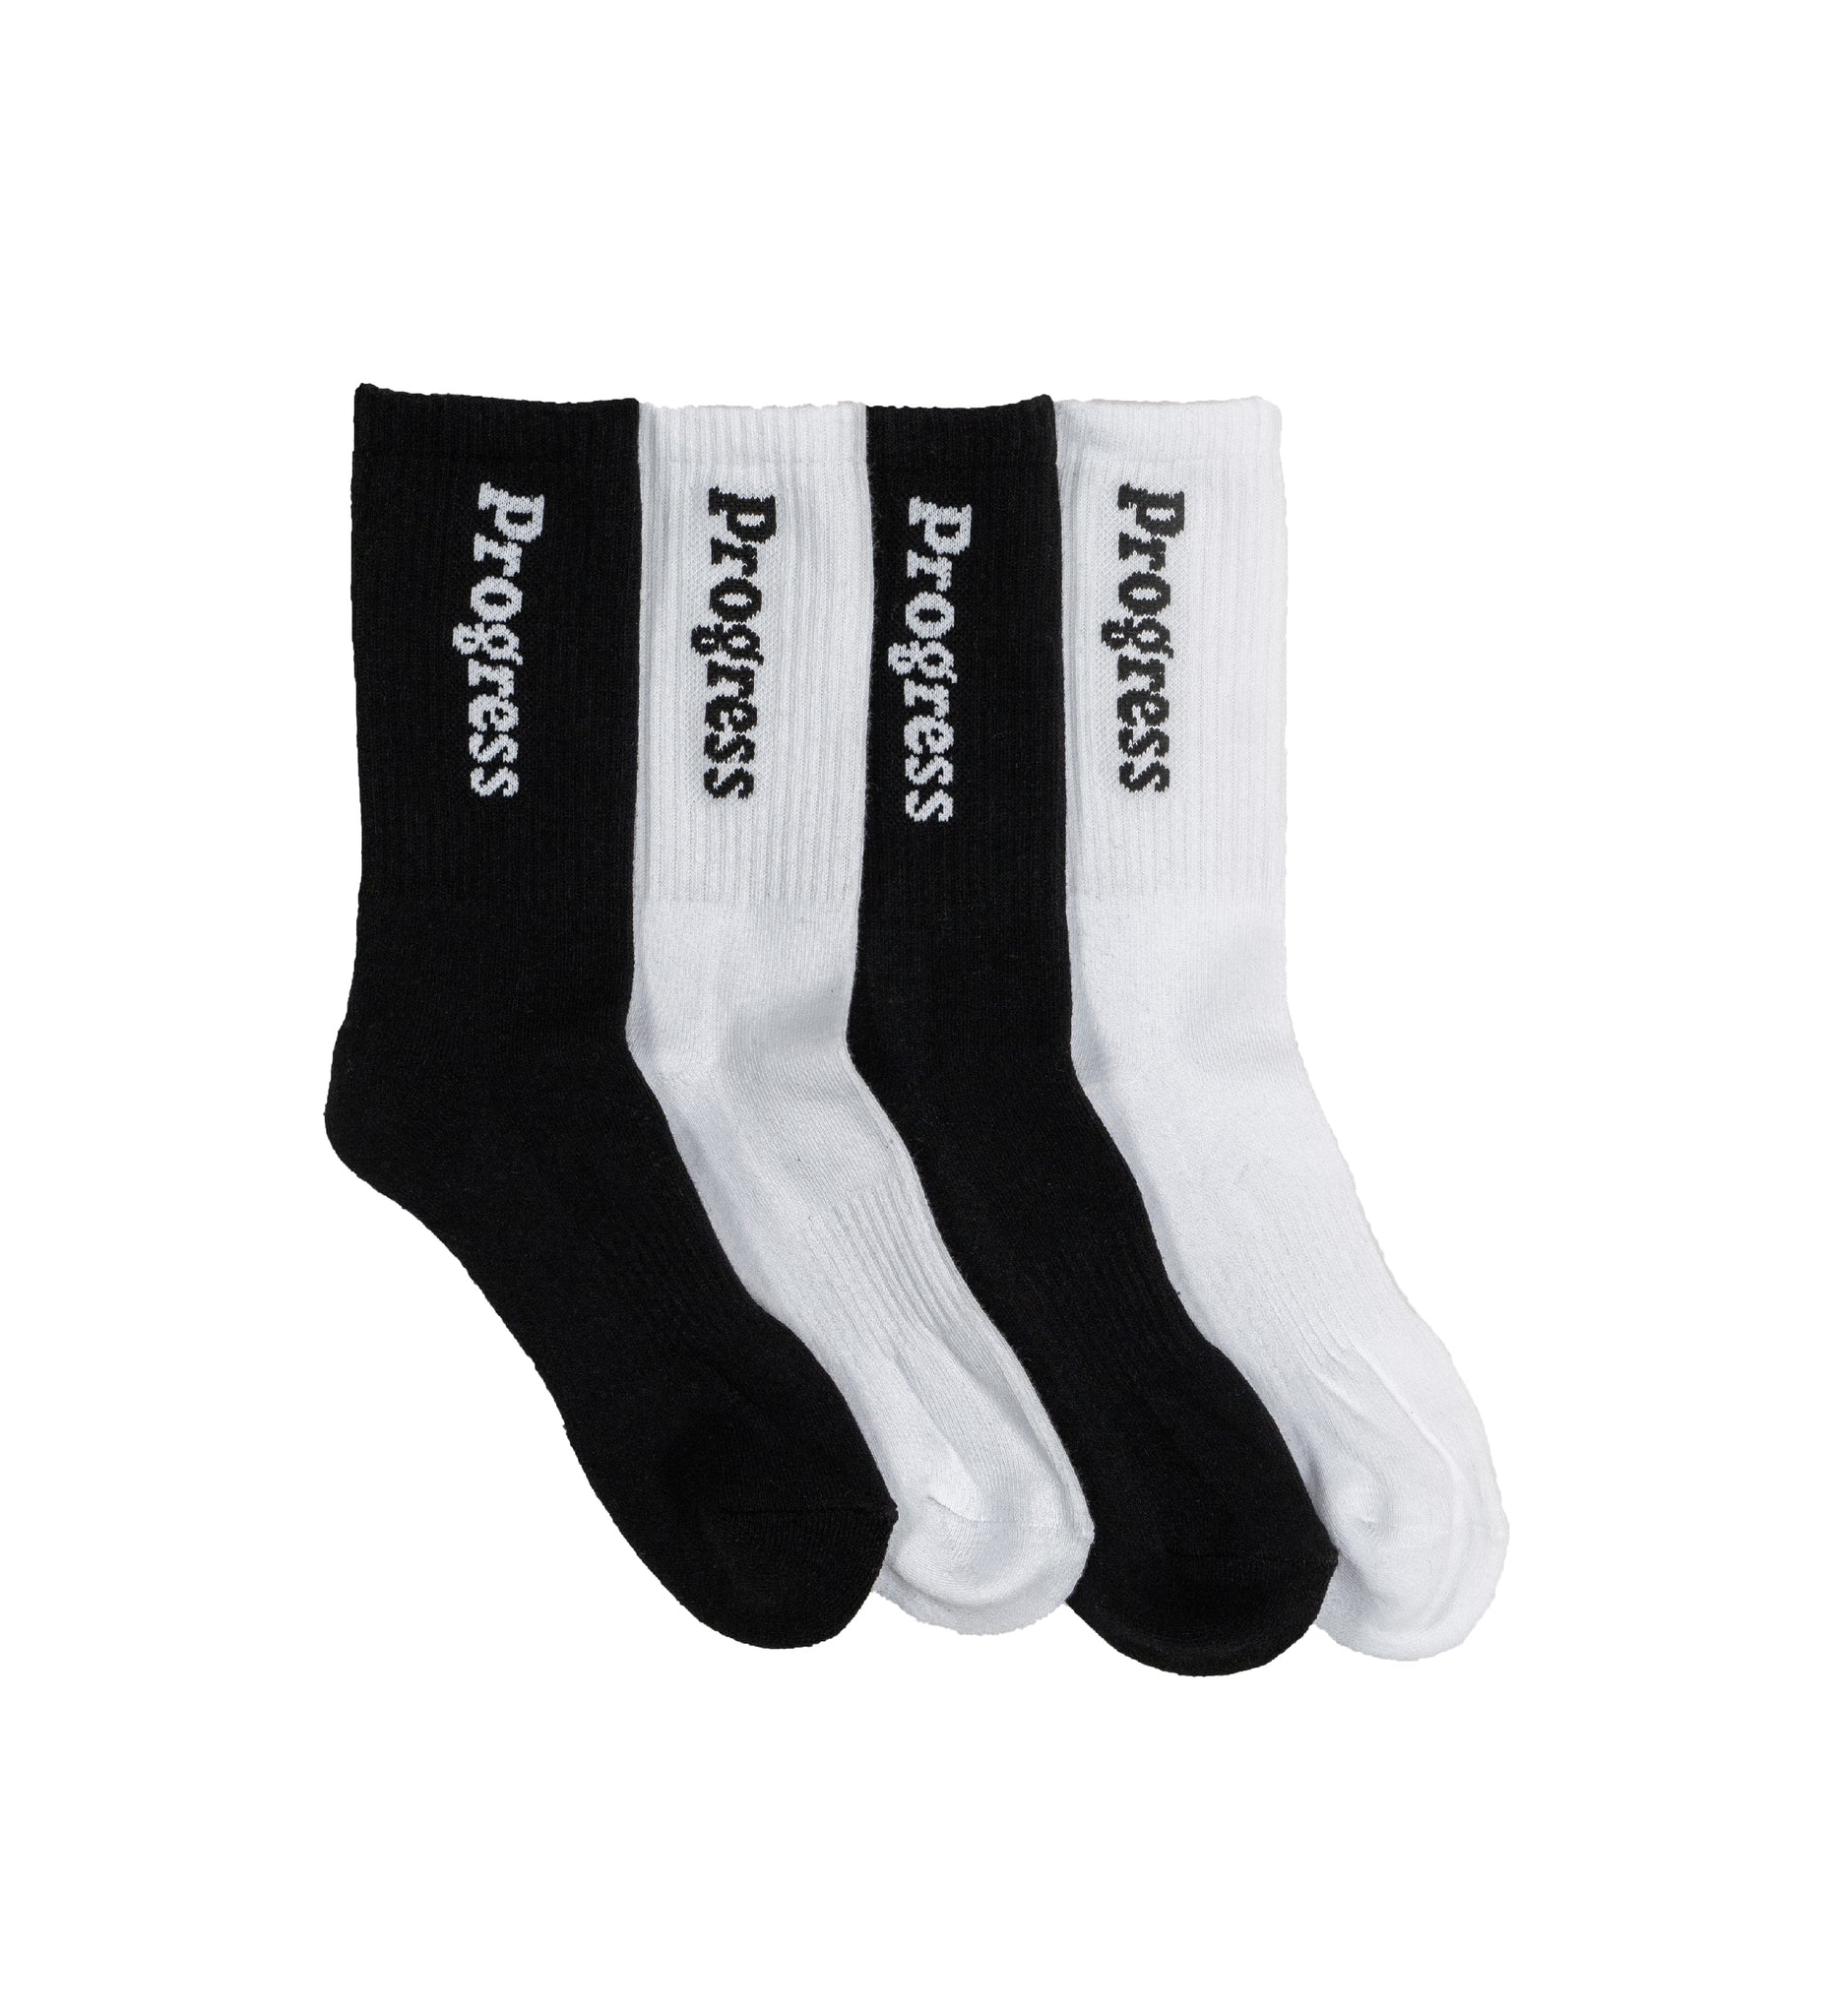 Progress PRO Socks - White & Black